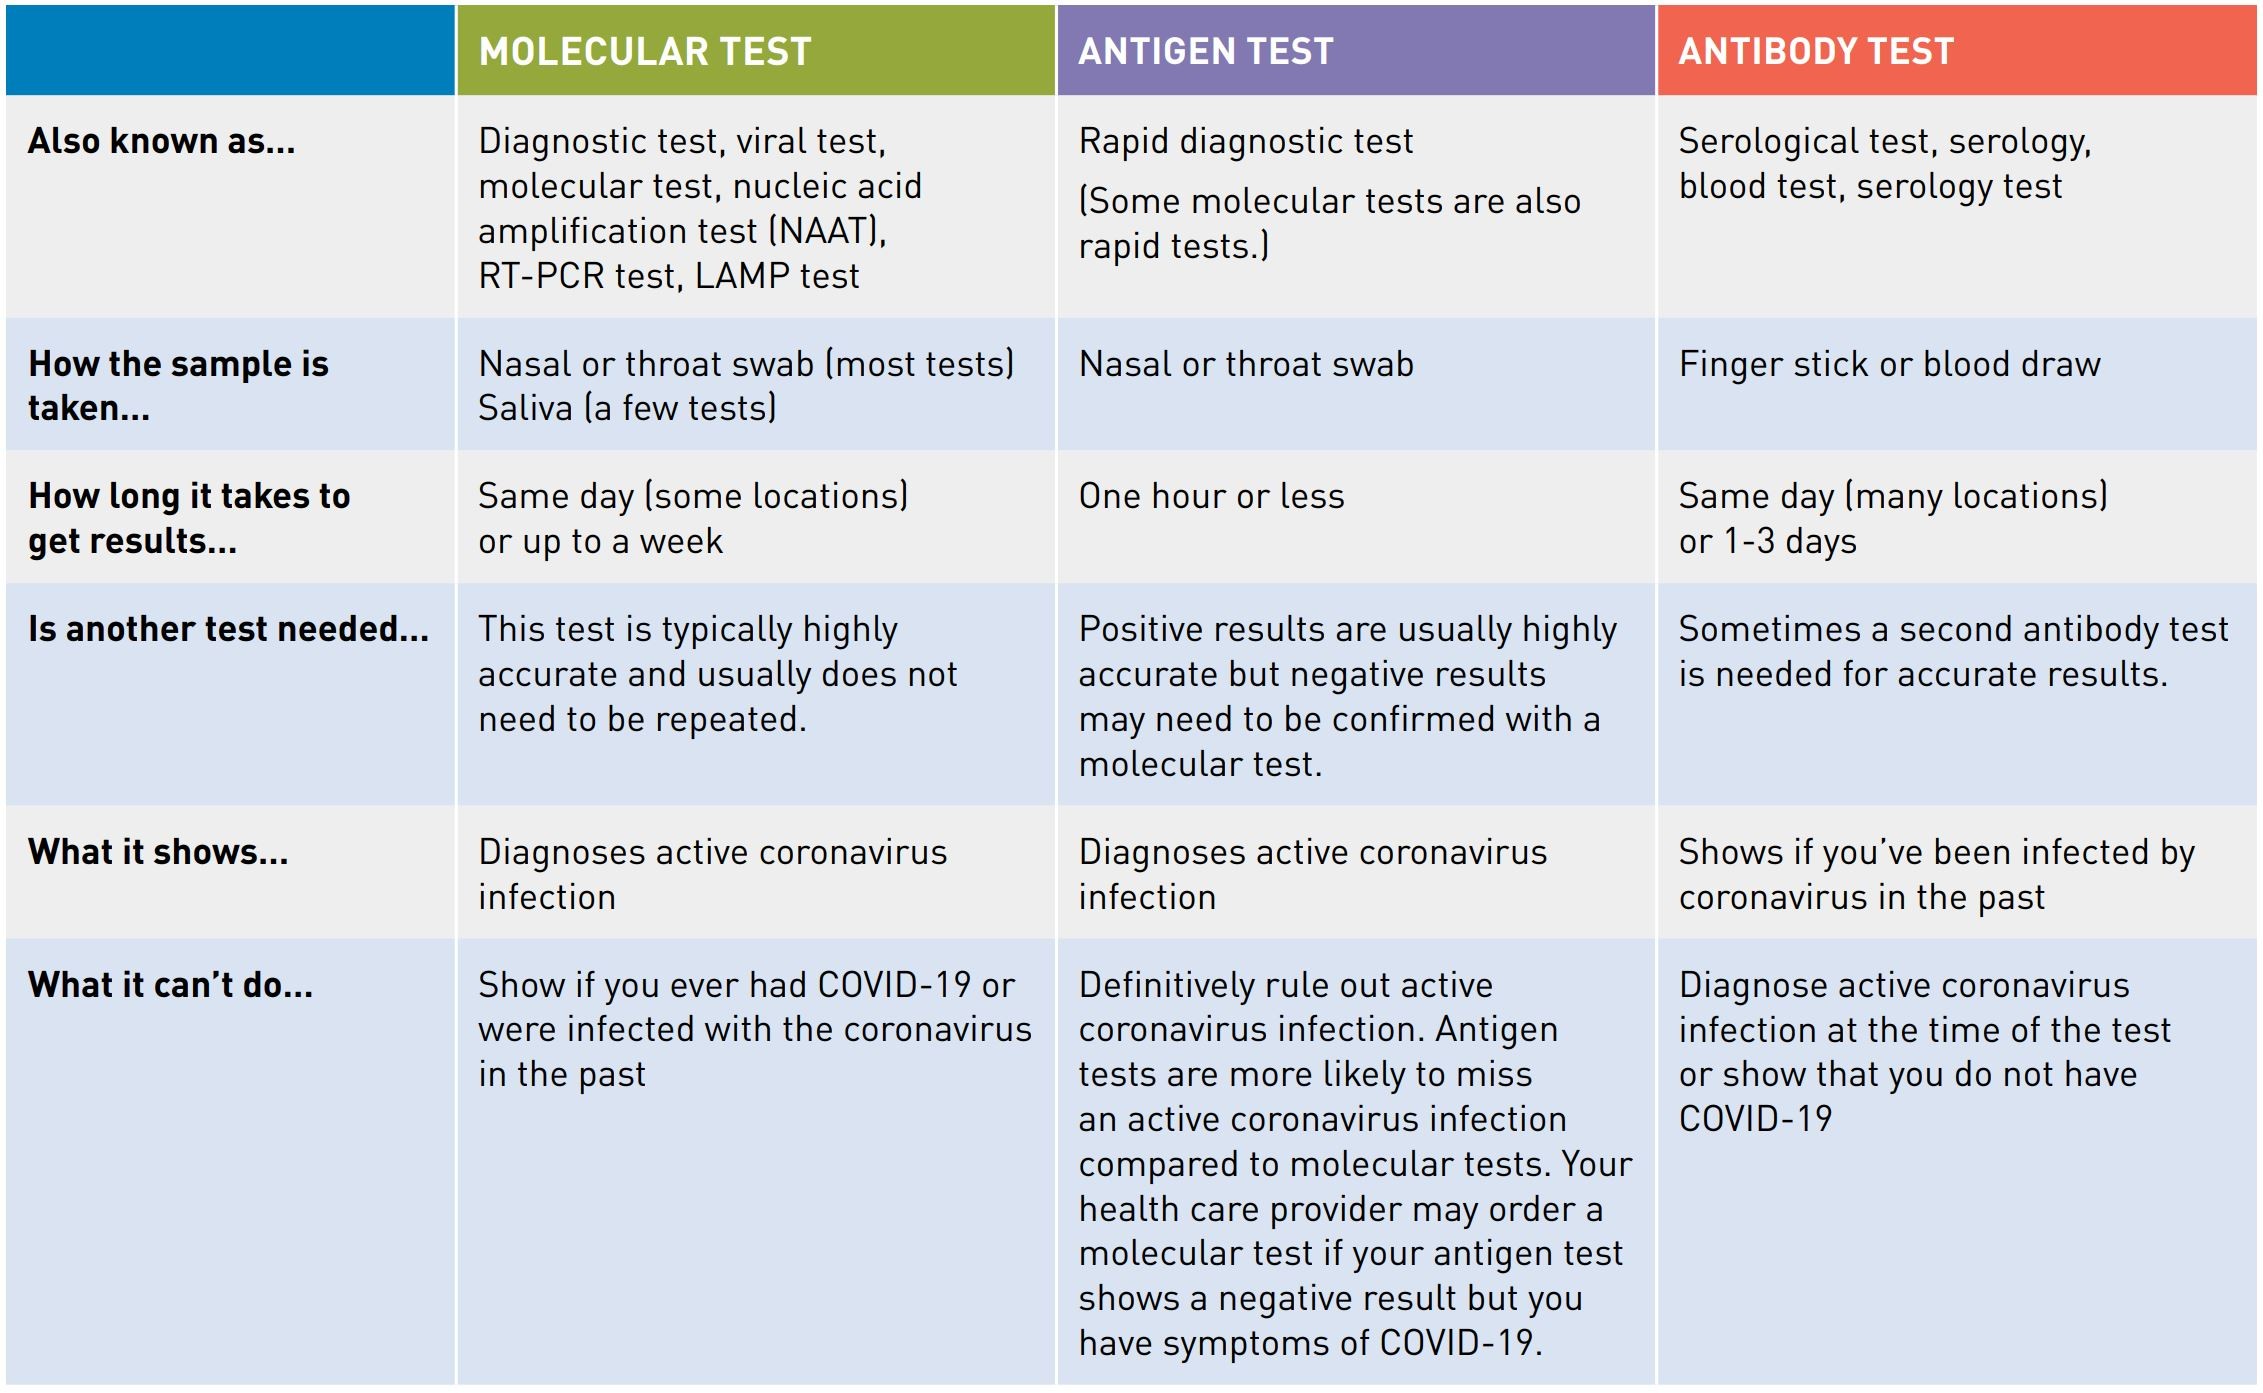 Comparison of COVID 19 molecular test antigen test and antibody test